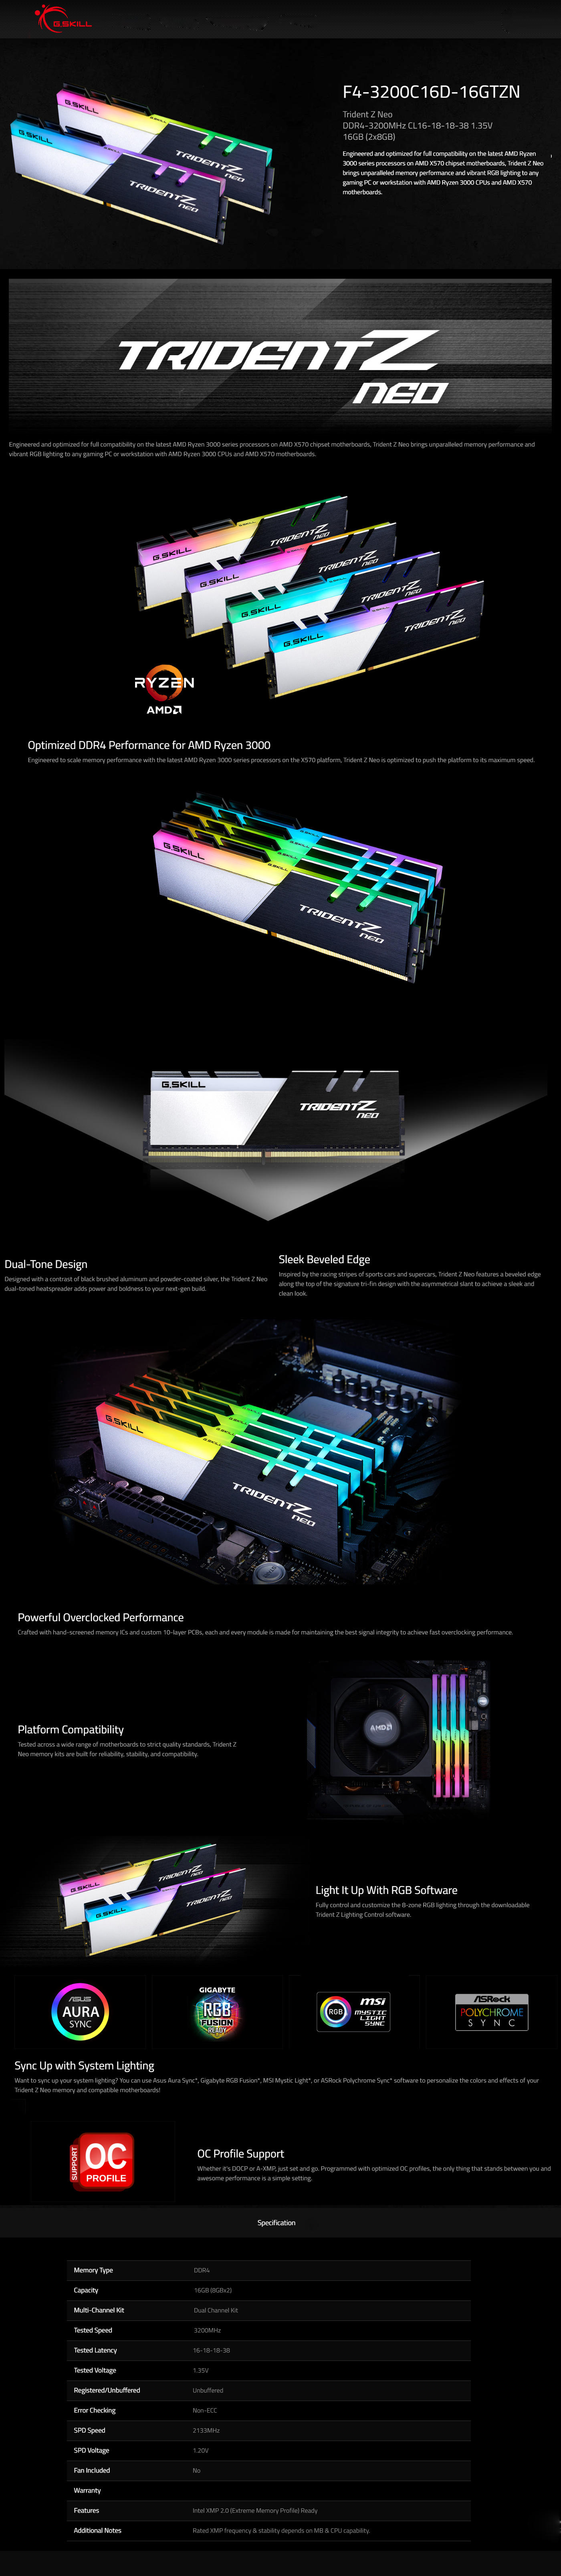 Buy Online G.skill Trident Z Neo 16GB (2 x 8GB) DDR4 3200MHz Desktop RAM (F4-3200C16D-16GTZN)